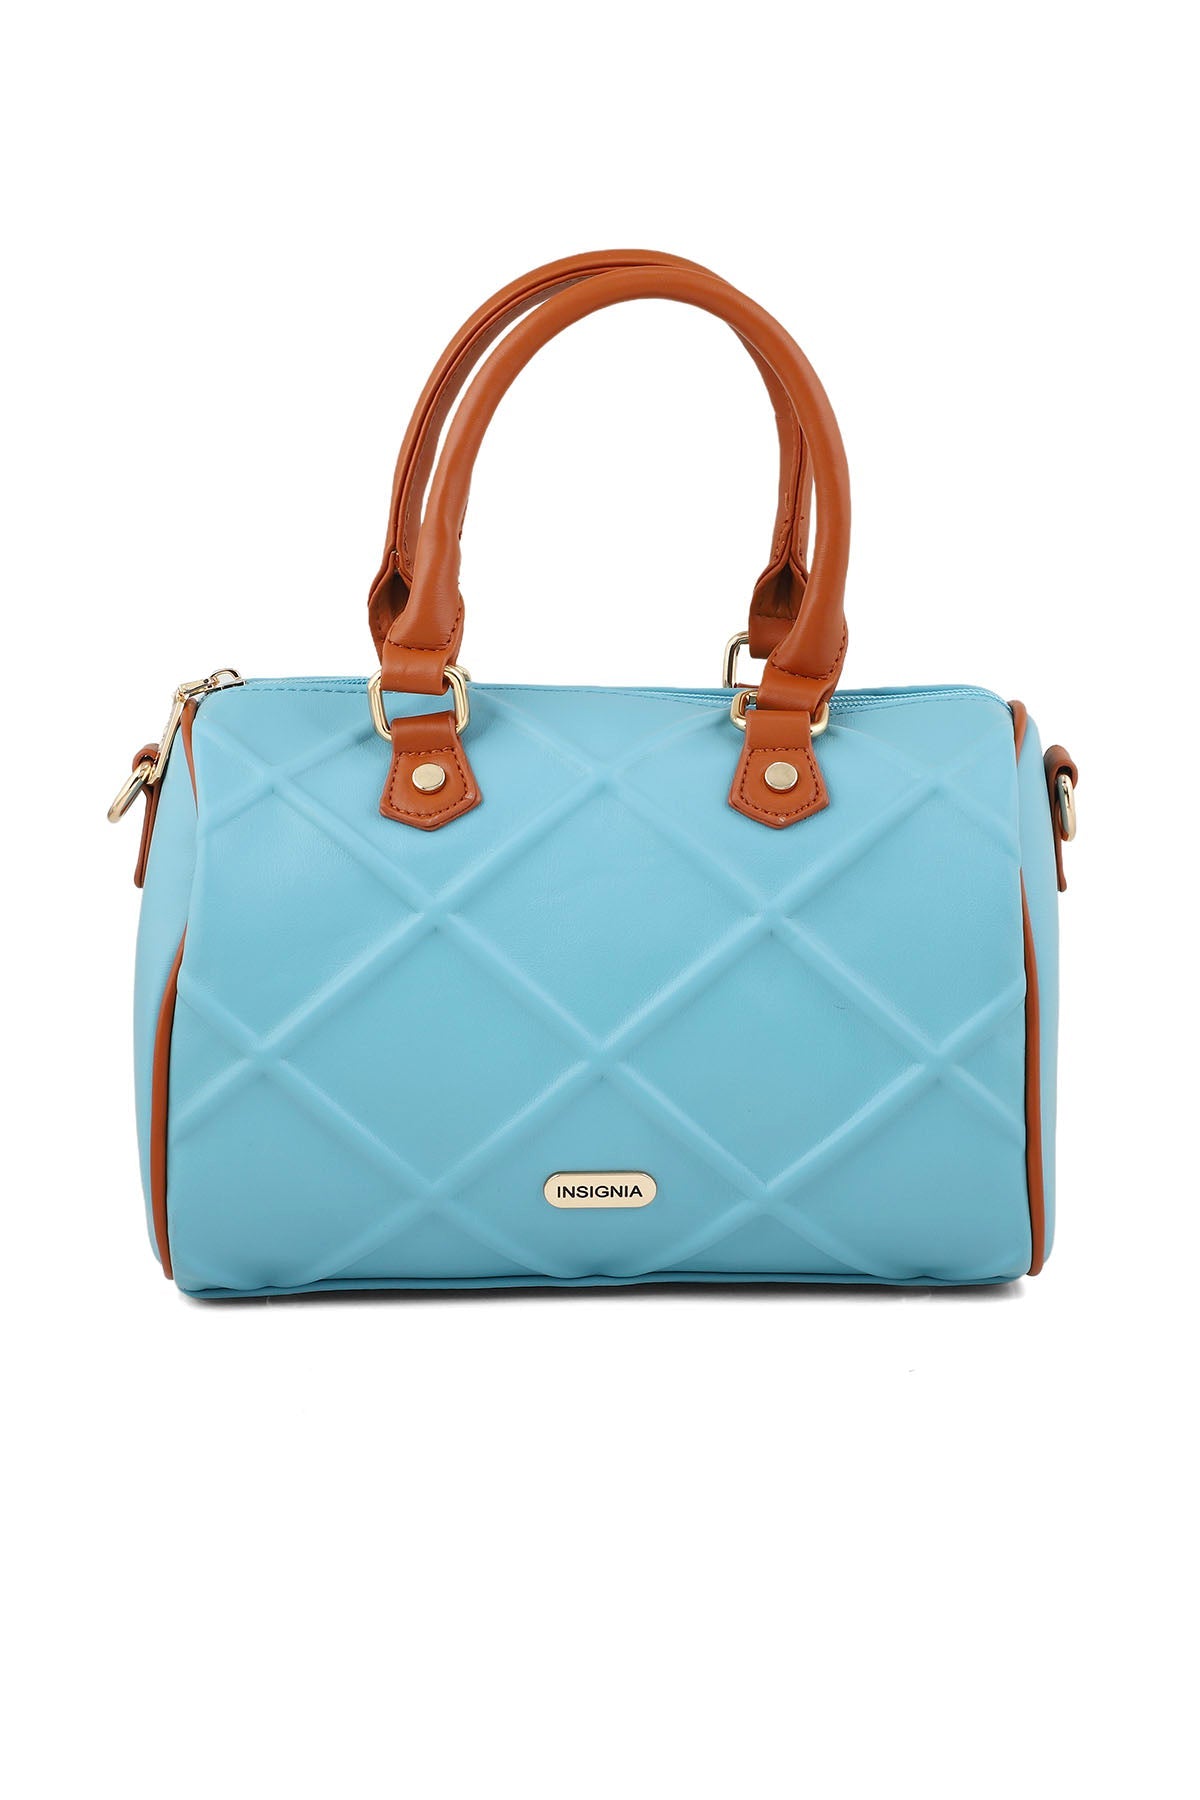 Top Handle Hand Bags B15041-Blue